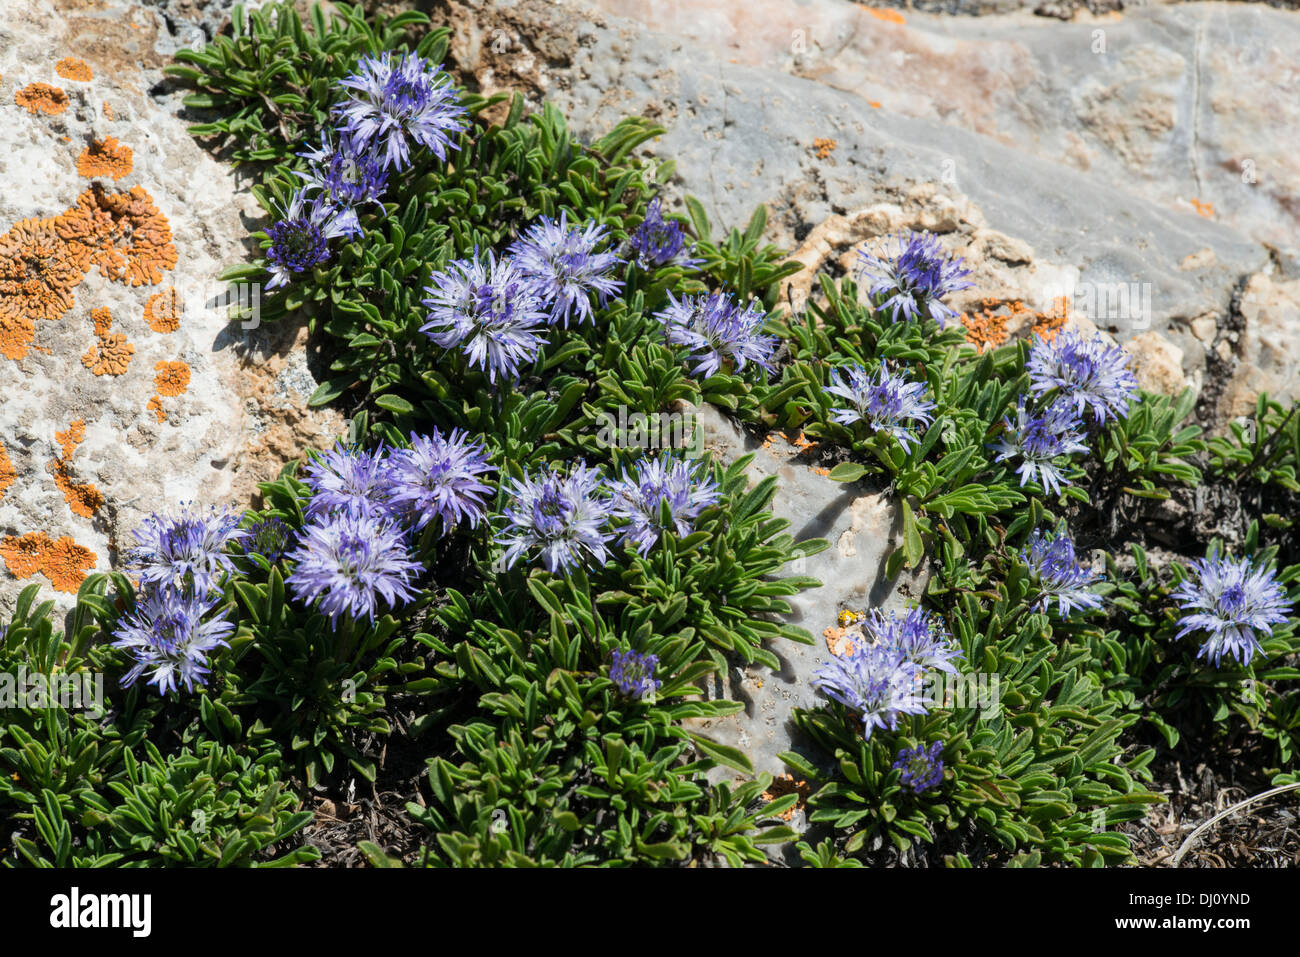 Matted Globularia (Globularia repens) flowers Stock Photo